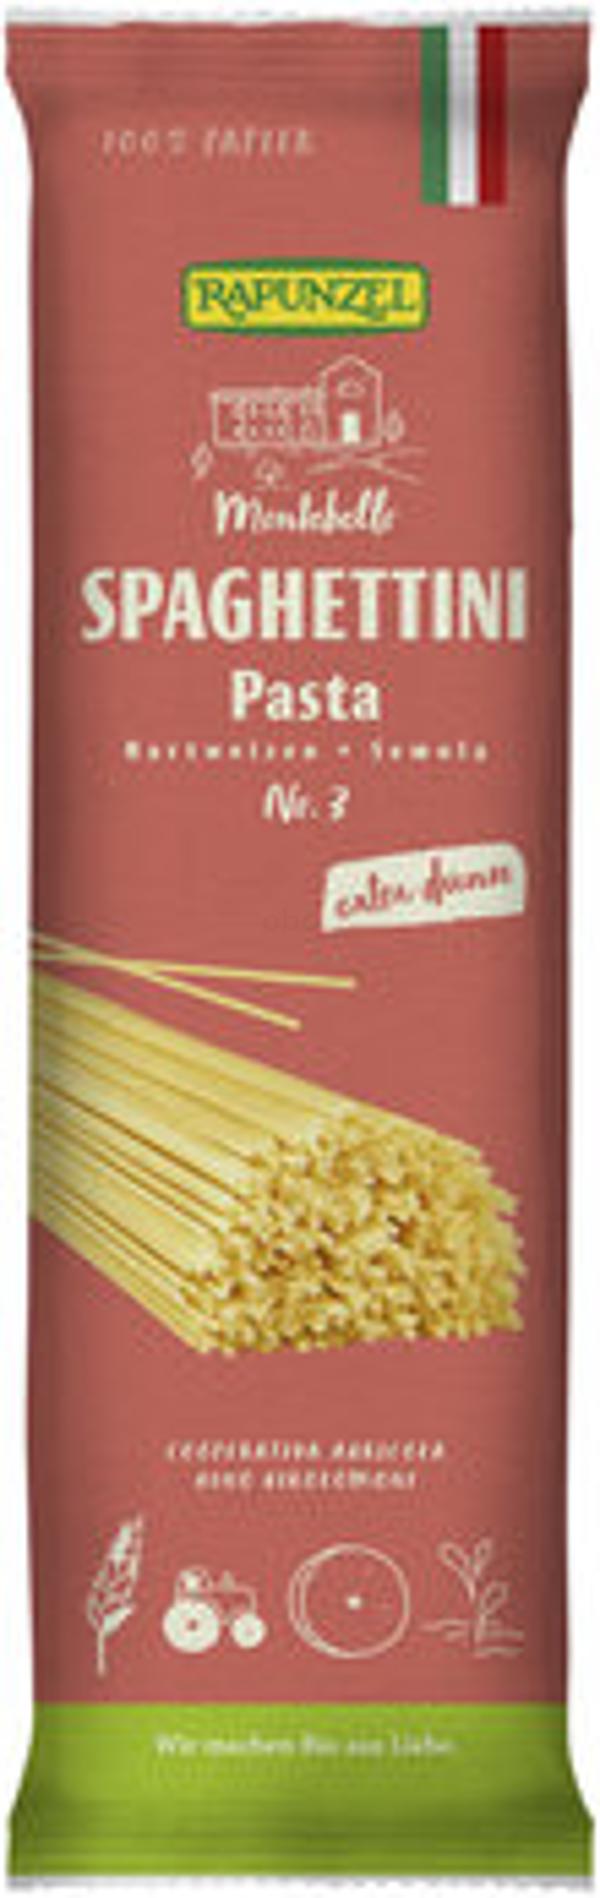 Produktfoto zu Spaghettini Semola, no.3 500g extra dünn